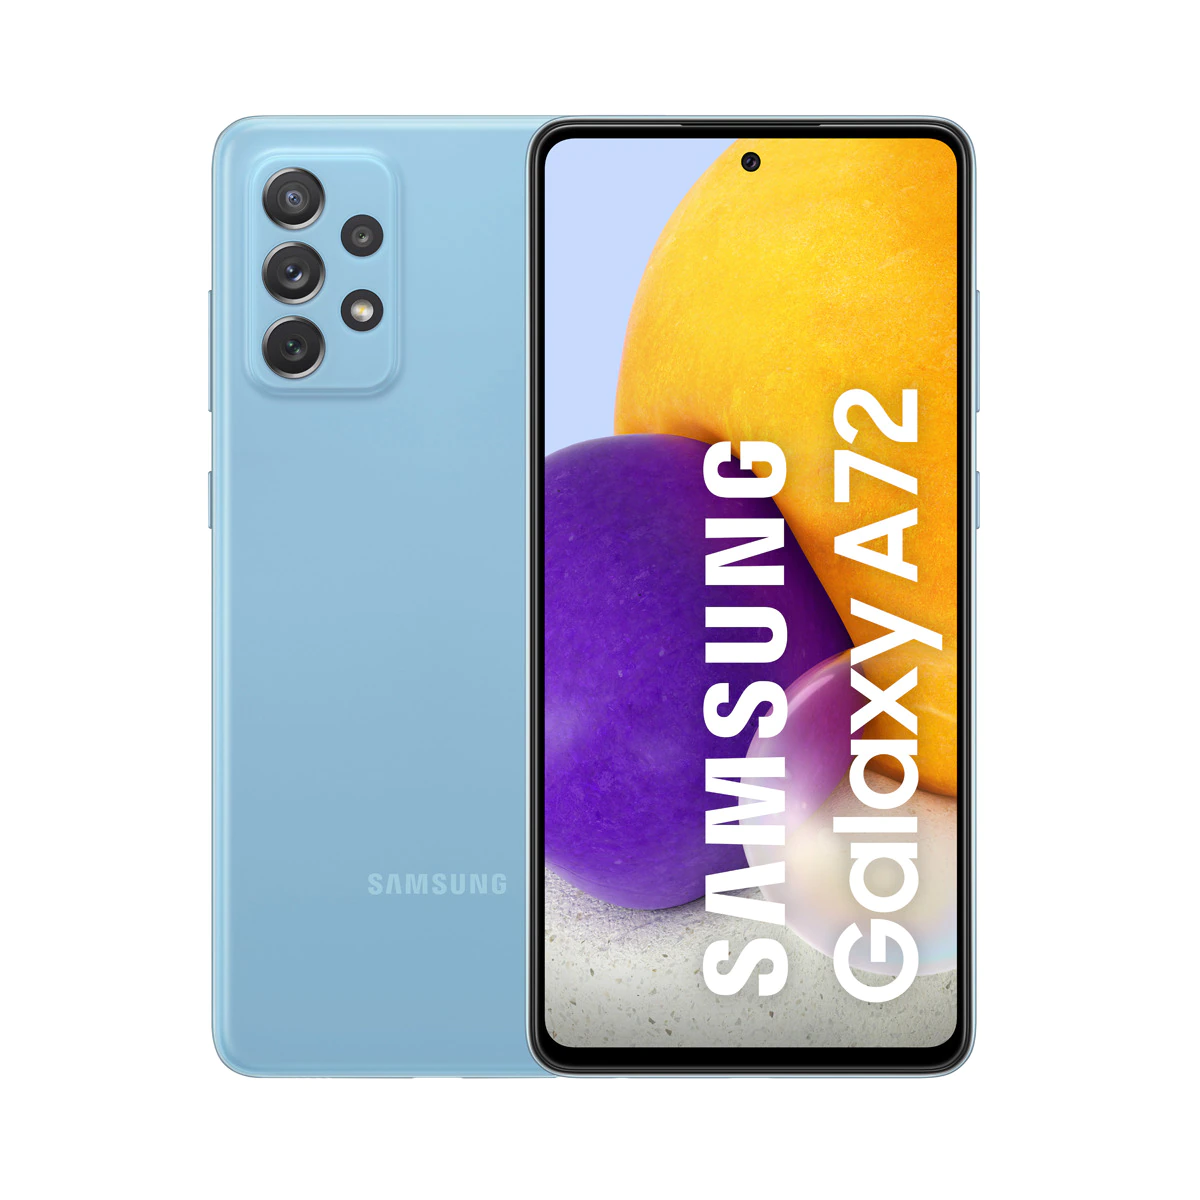 Samsung Galaxy A72 6 GB + 128 GB azul móvil libre